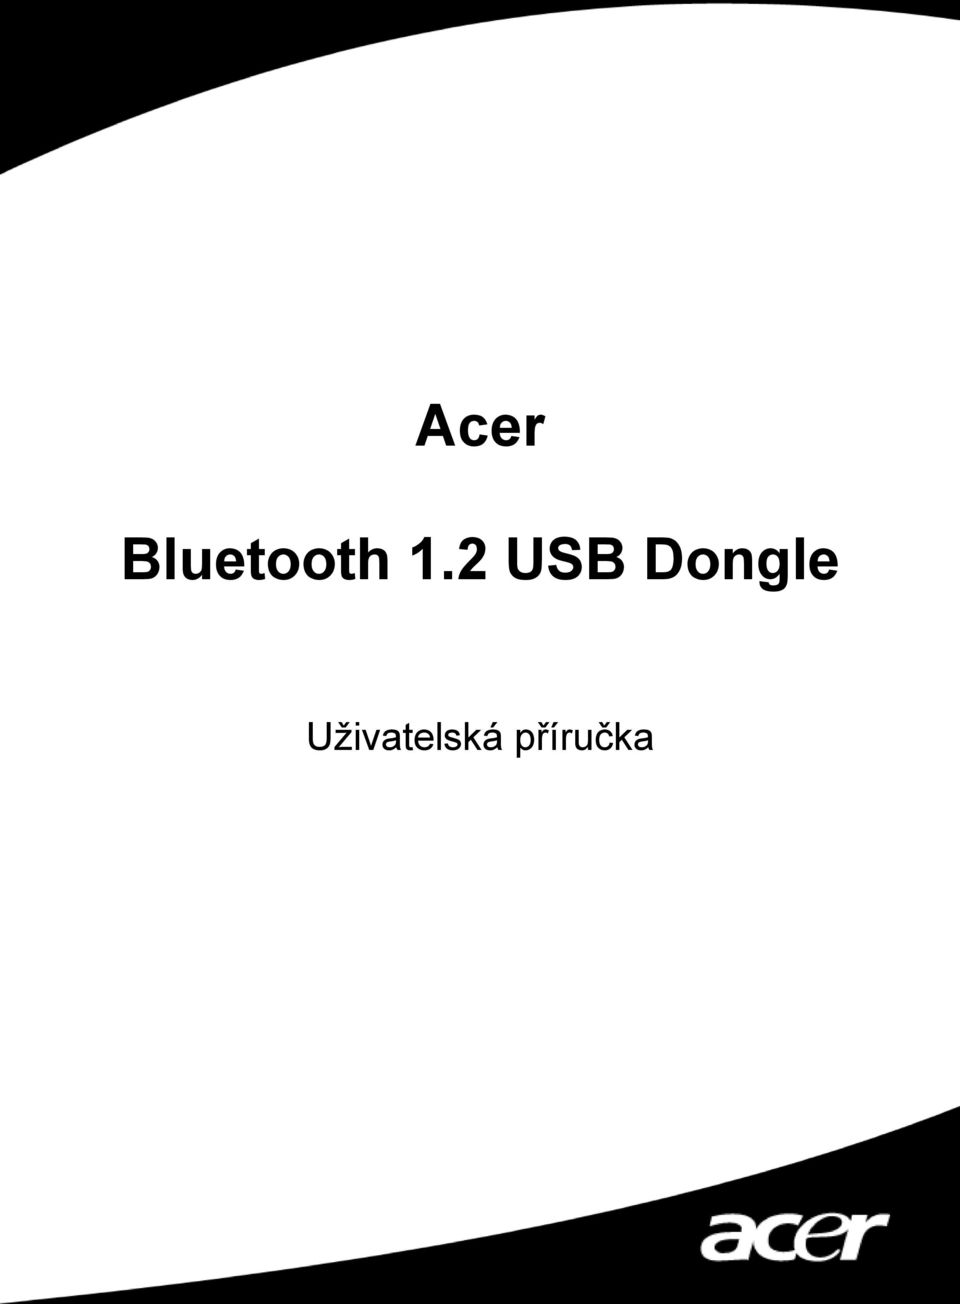 2 USB Dongle